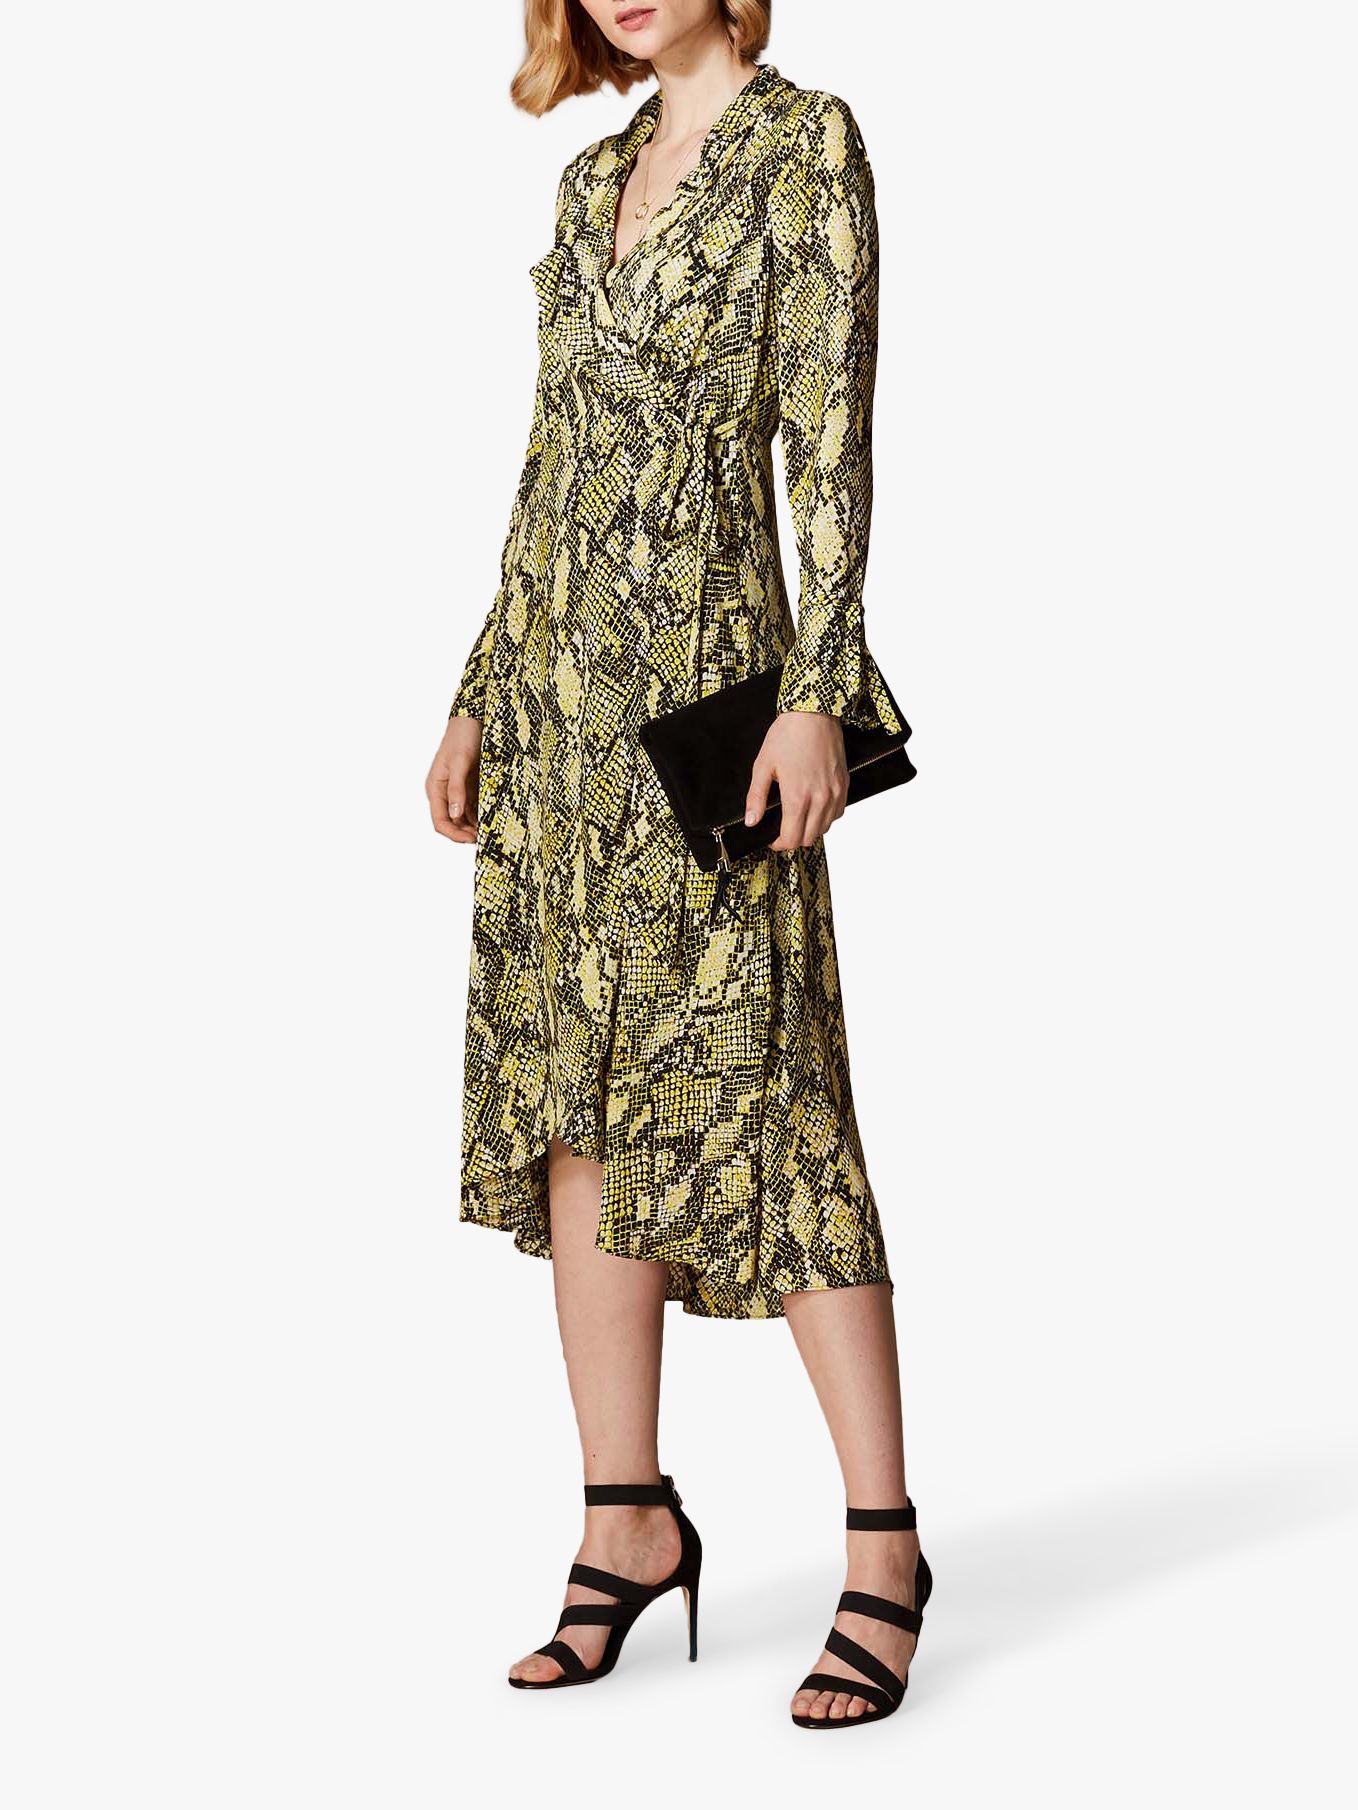 Karen Millen Snake Print Wrap Dress, Yellow/Multi